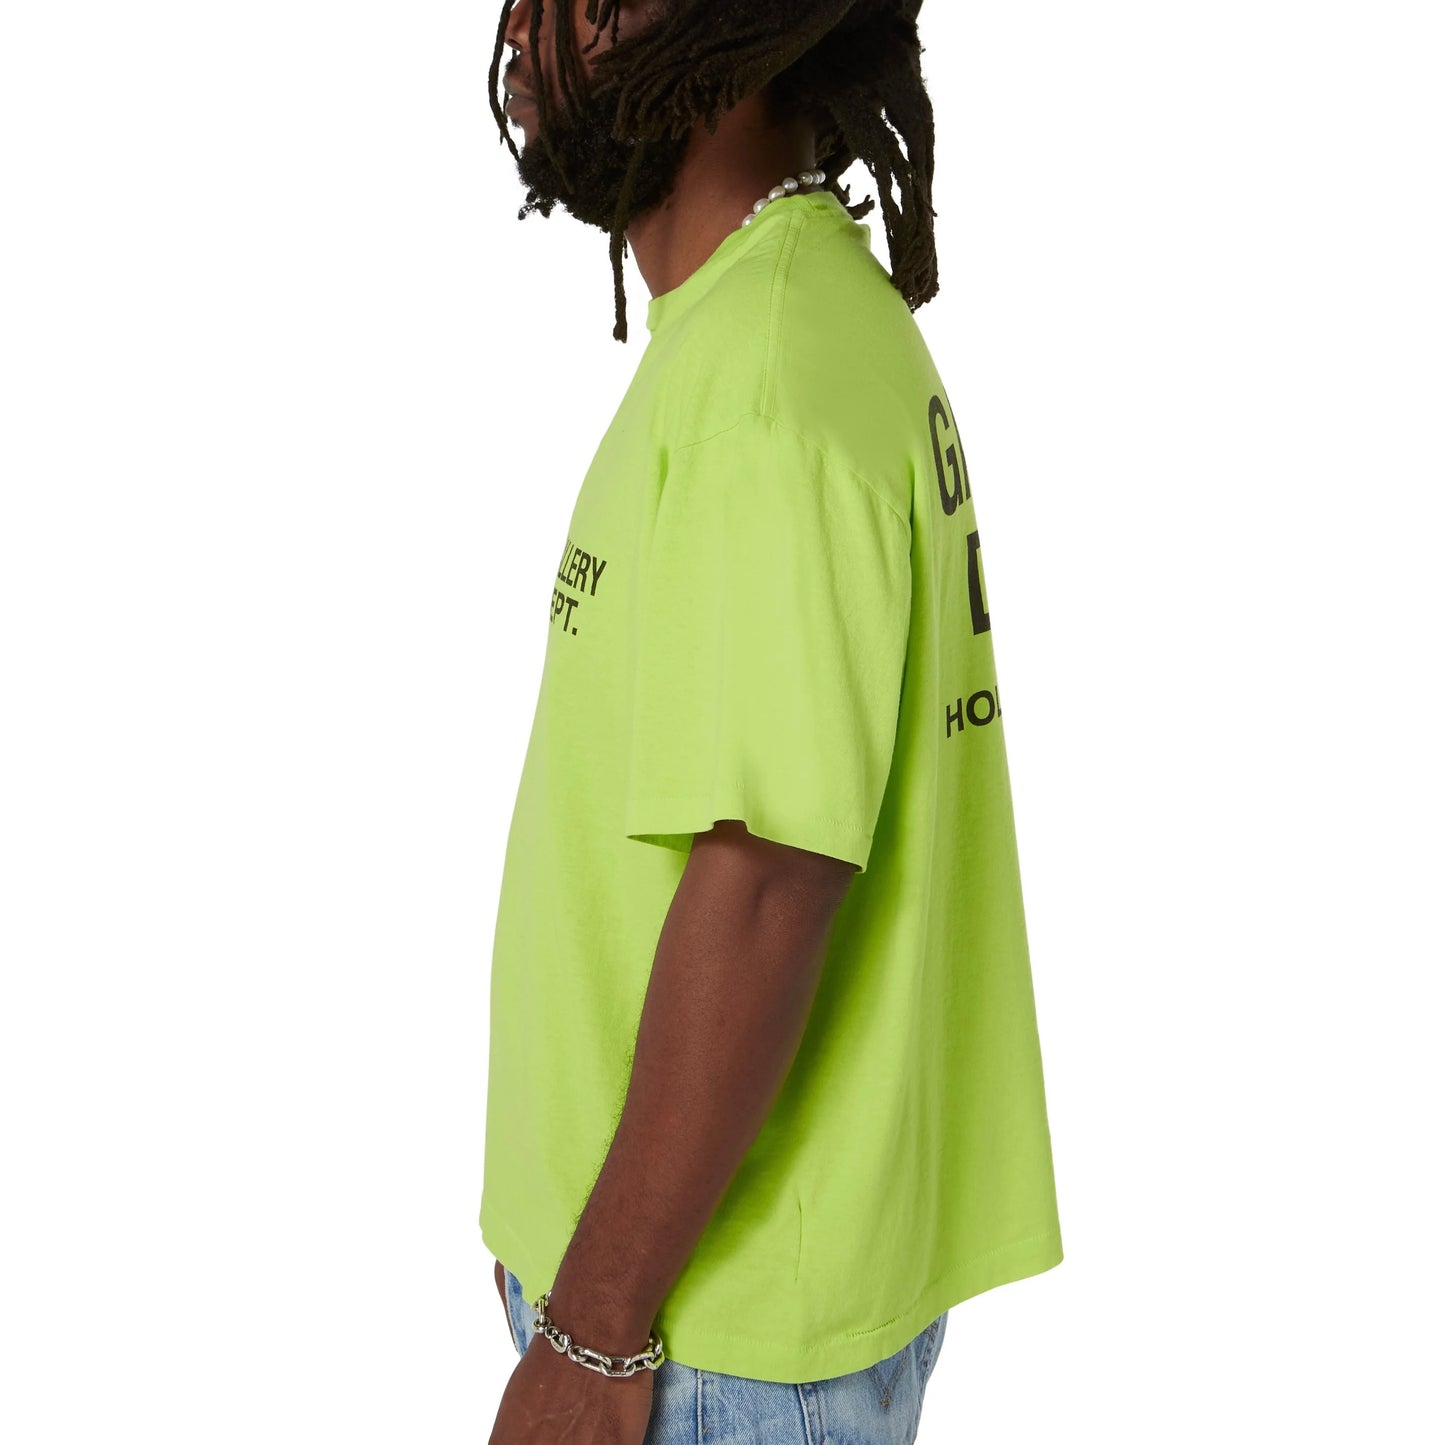 Gallery Dept Lime Green Souvenir T-Shirt On Body View 1